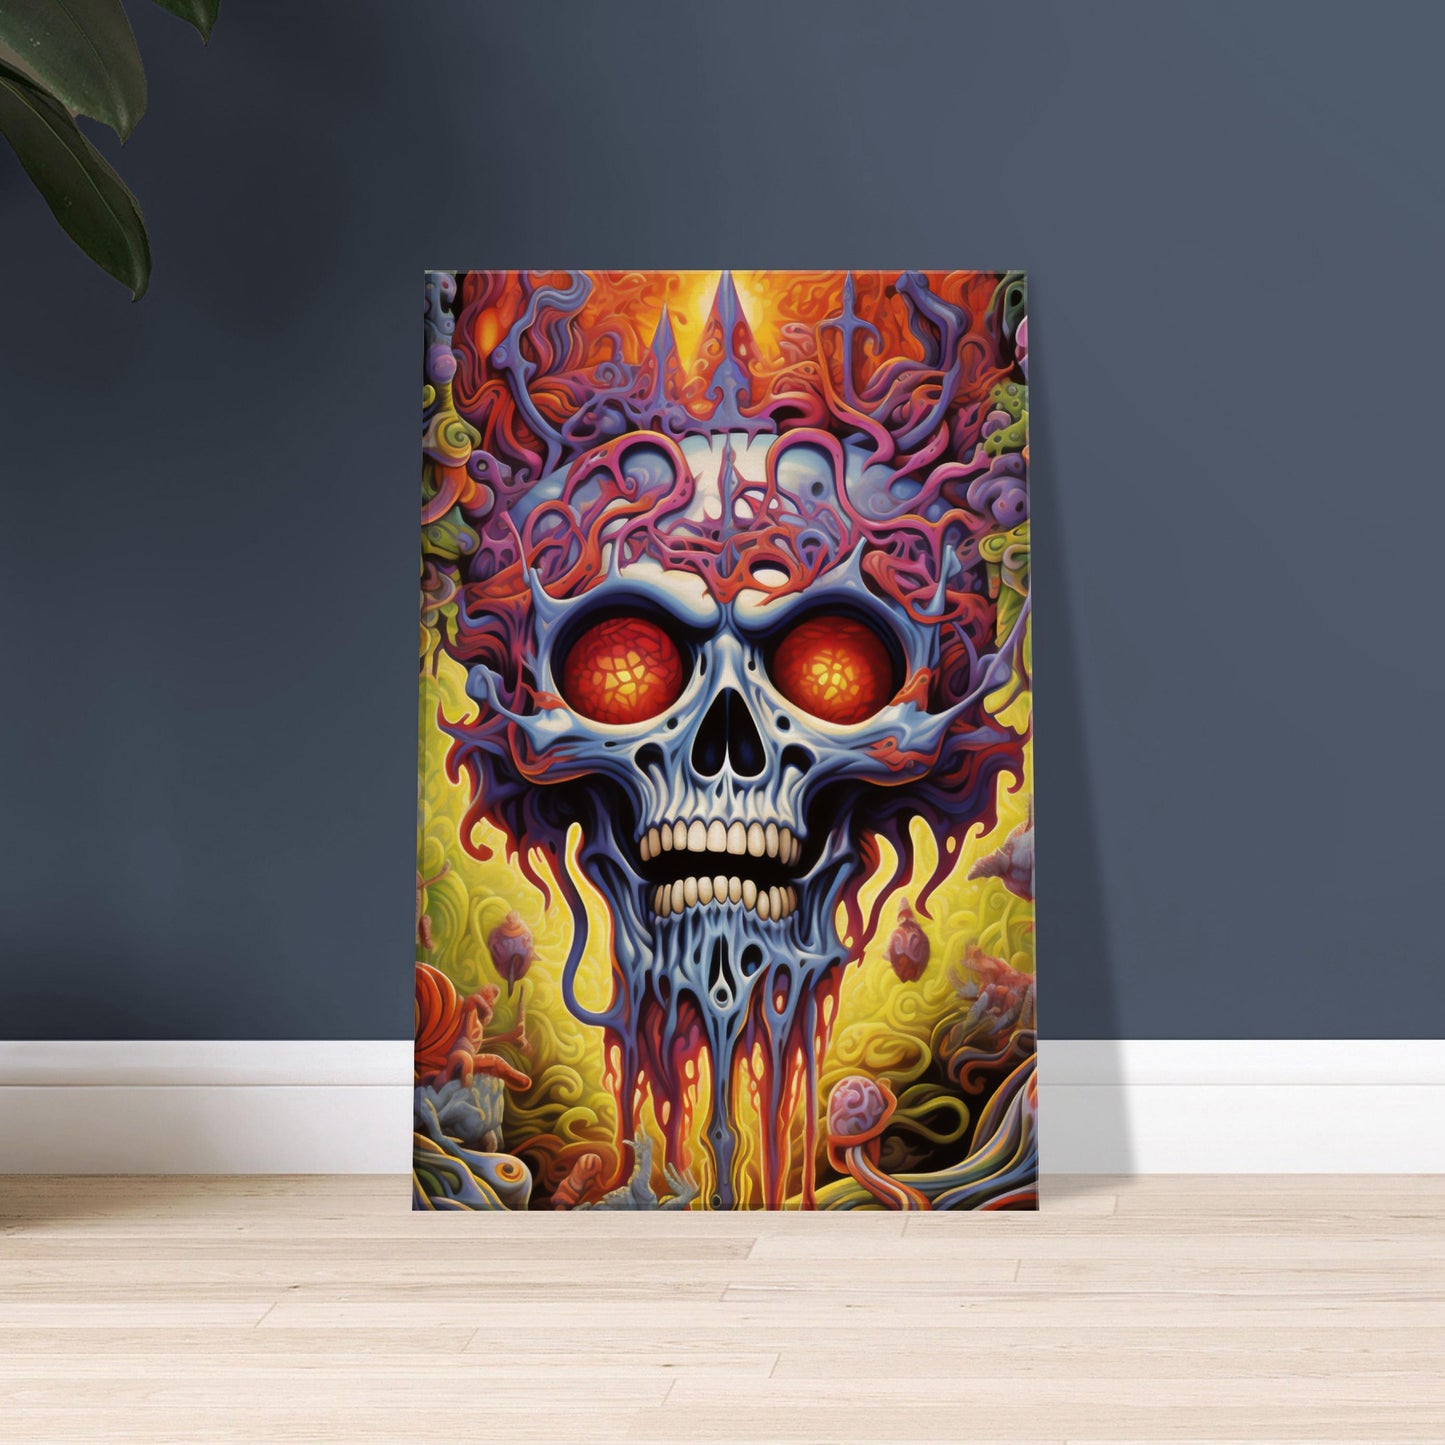 Melting Skull psychedelic art canvas